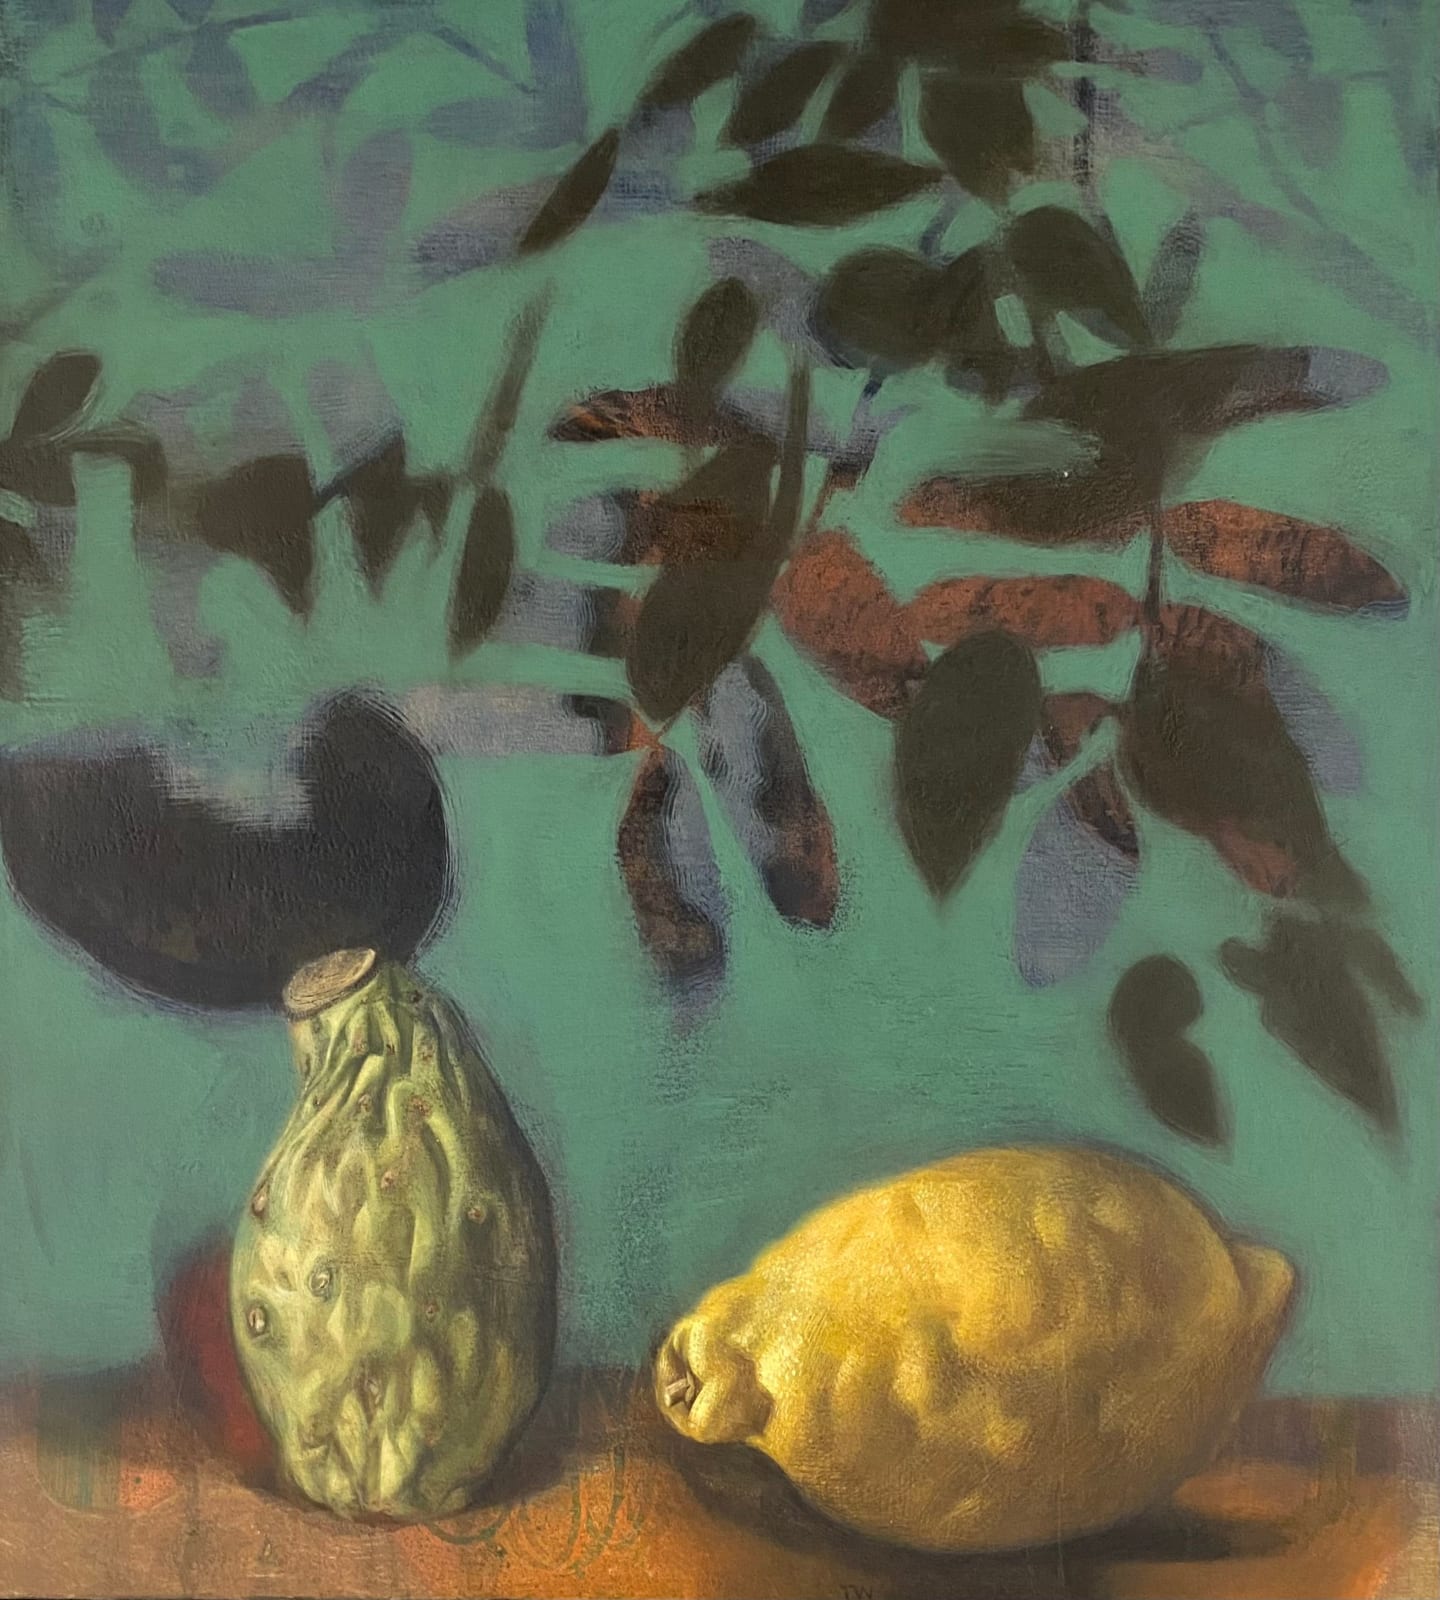 Tom Wood, Lemon and Prickly Pear, 2003